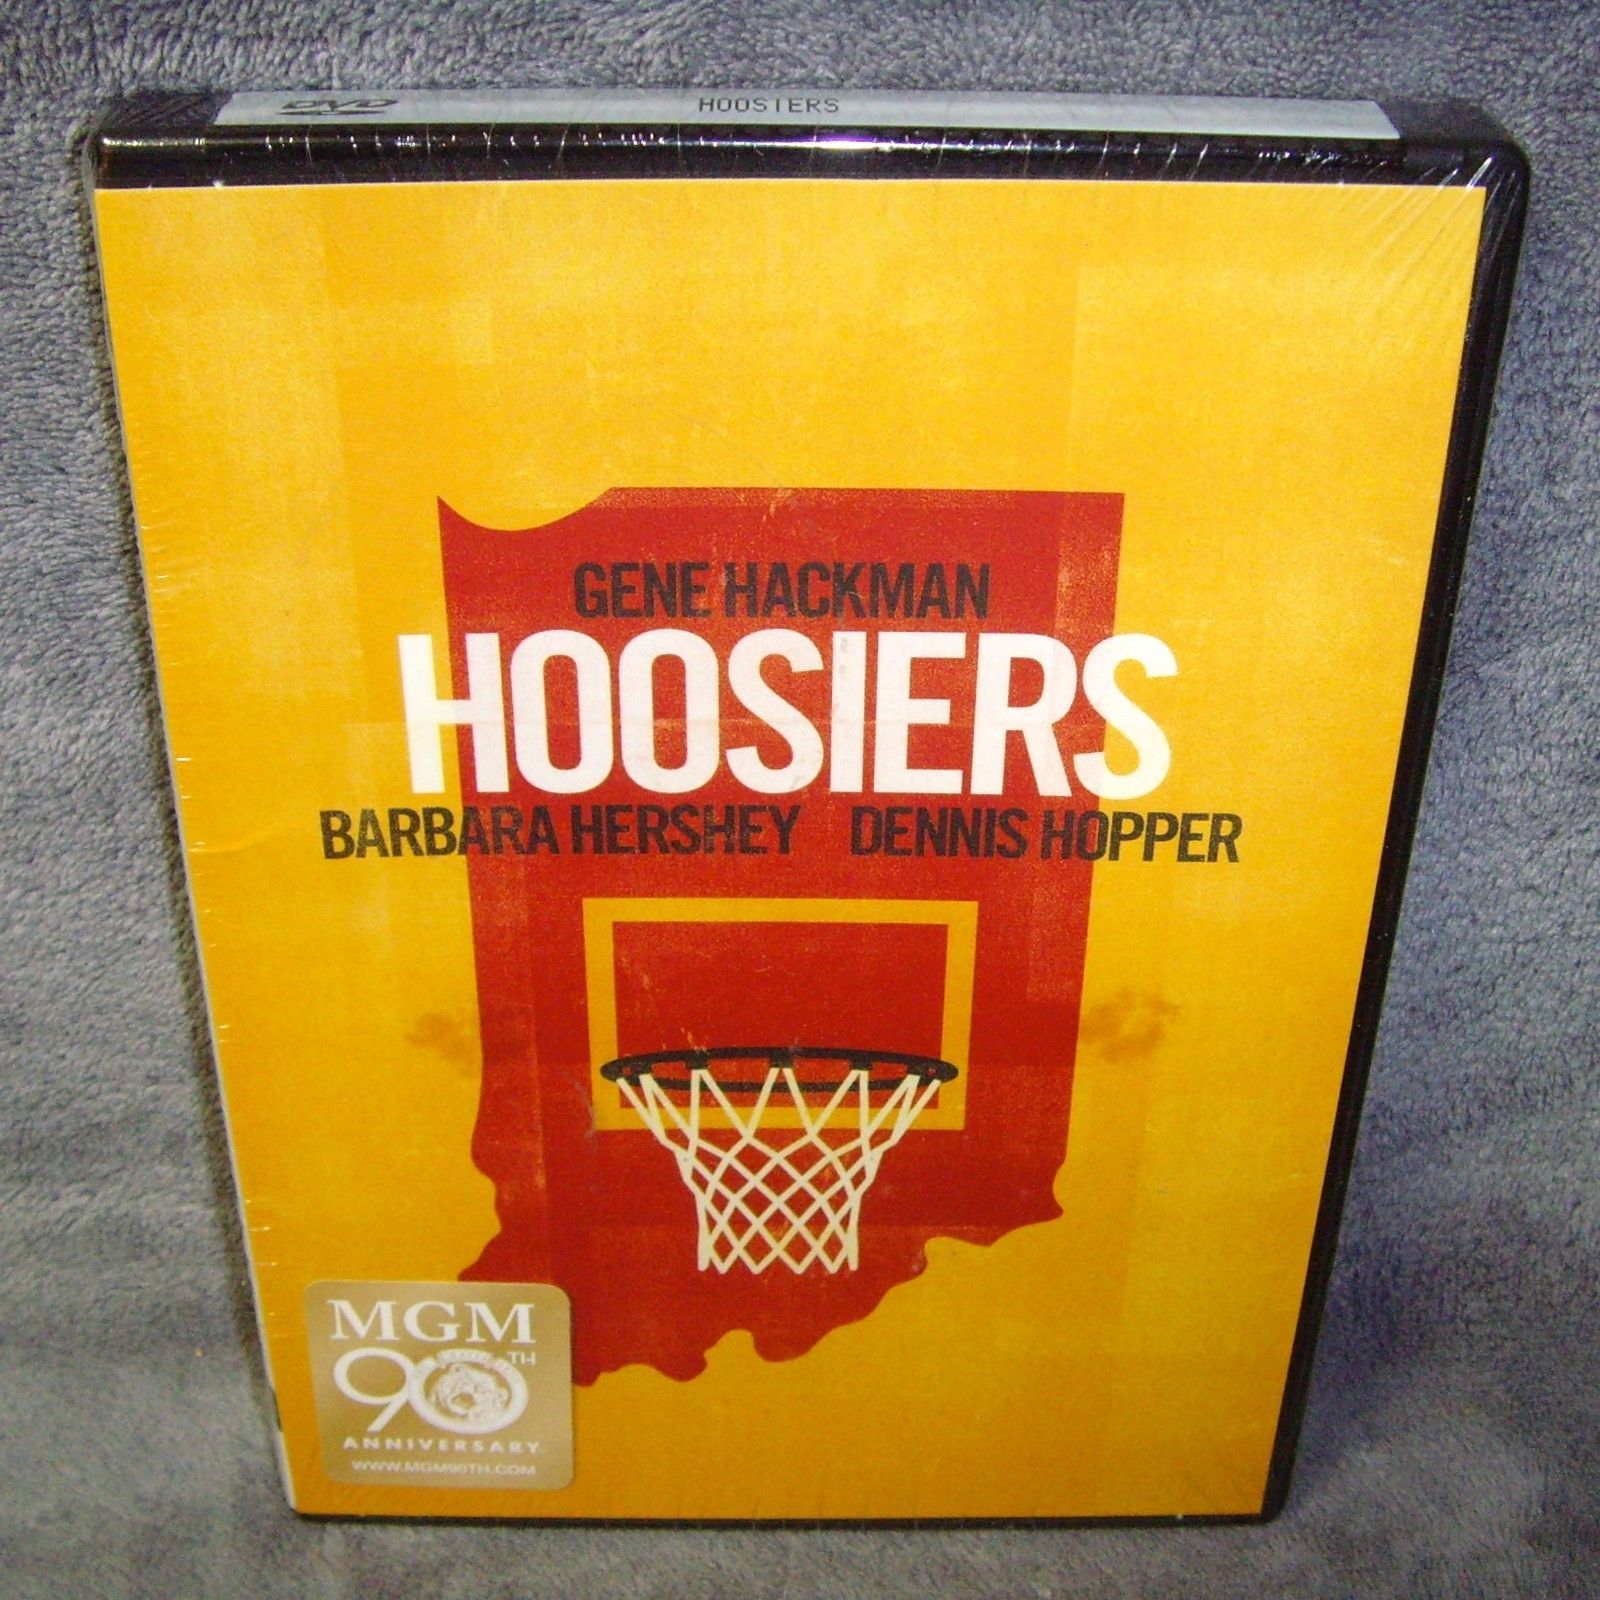 Primary image for Hoosiers (DVD, 2012) New!•Sealed!•USA•Gene Hackman•Barbara Hershey•Dennis Hopper